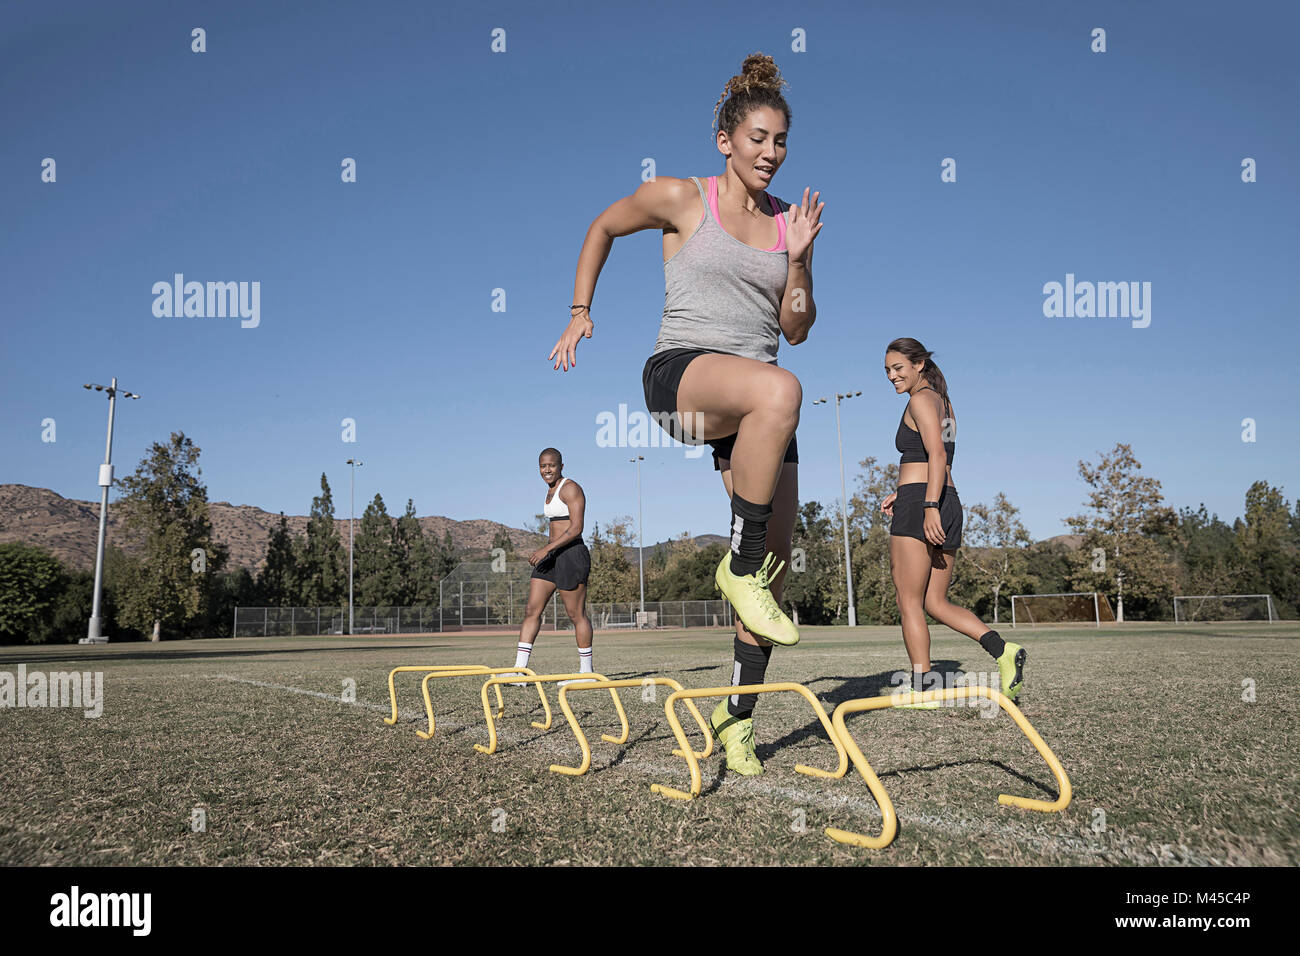 Woman jumping over agility hurdles Stock Photo